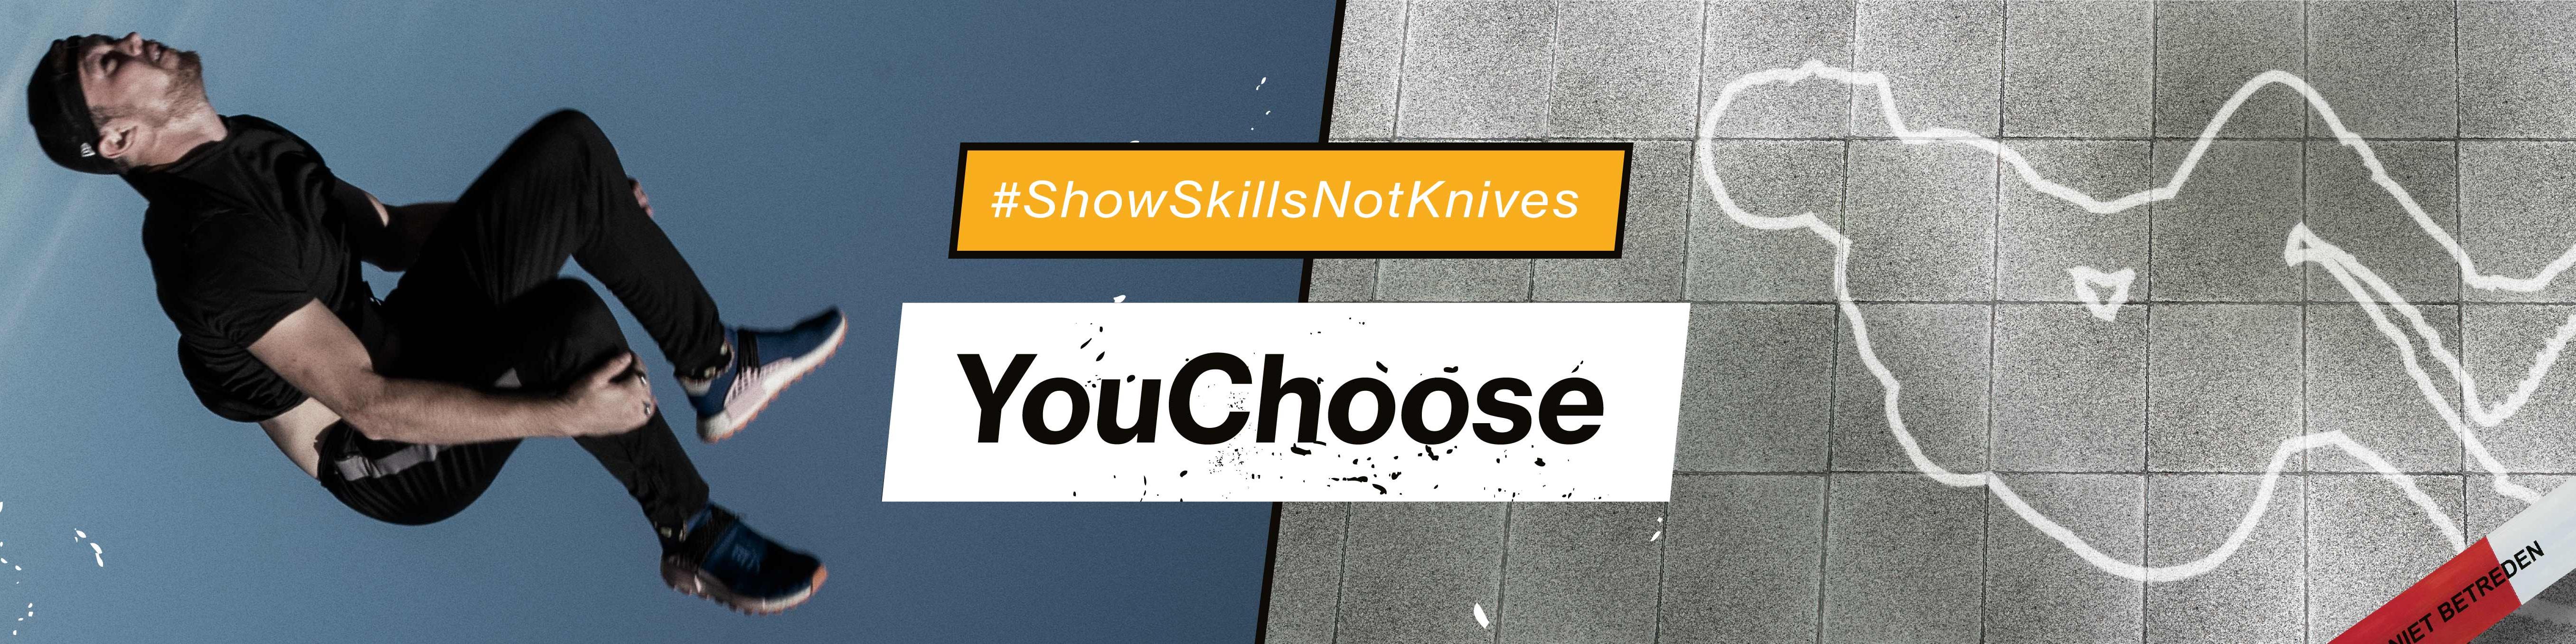 #ShowSkillsNotKnives Youchoose